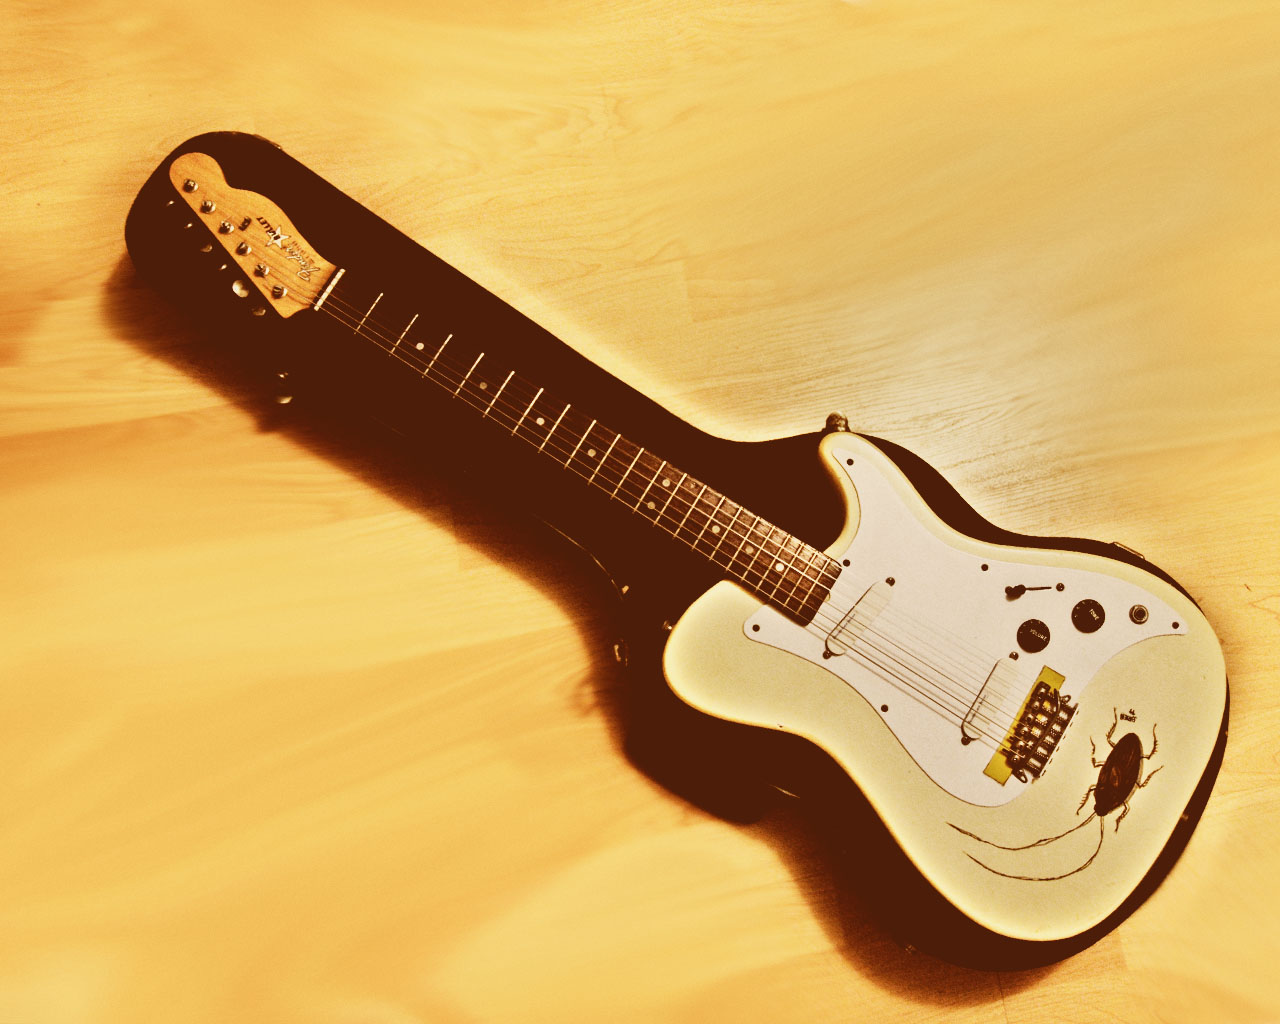 Fender Guitar Wallpaper For Desktop HD In Music